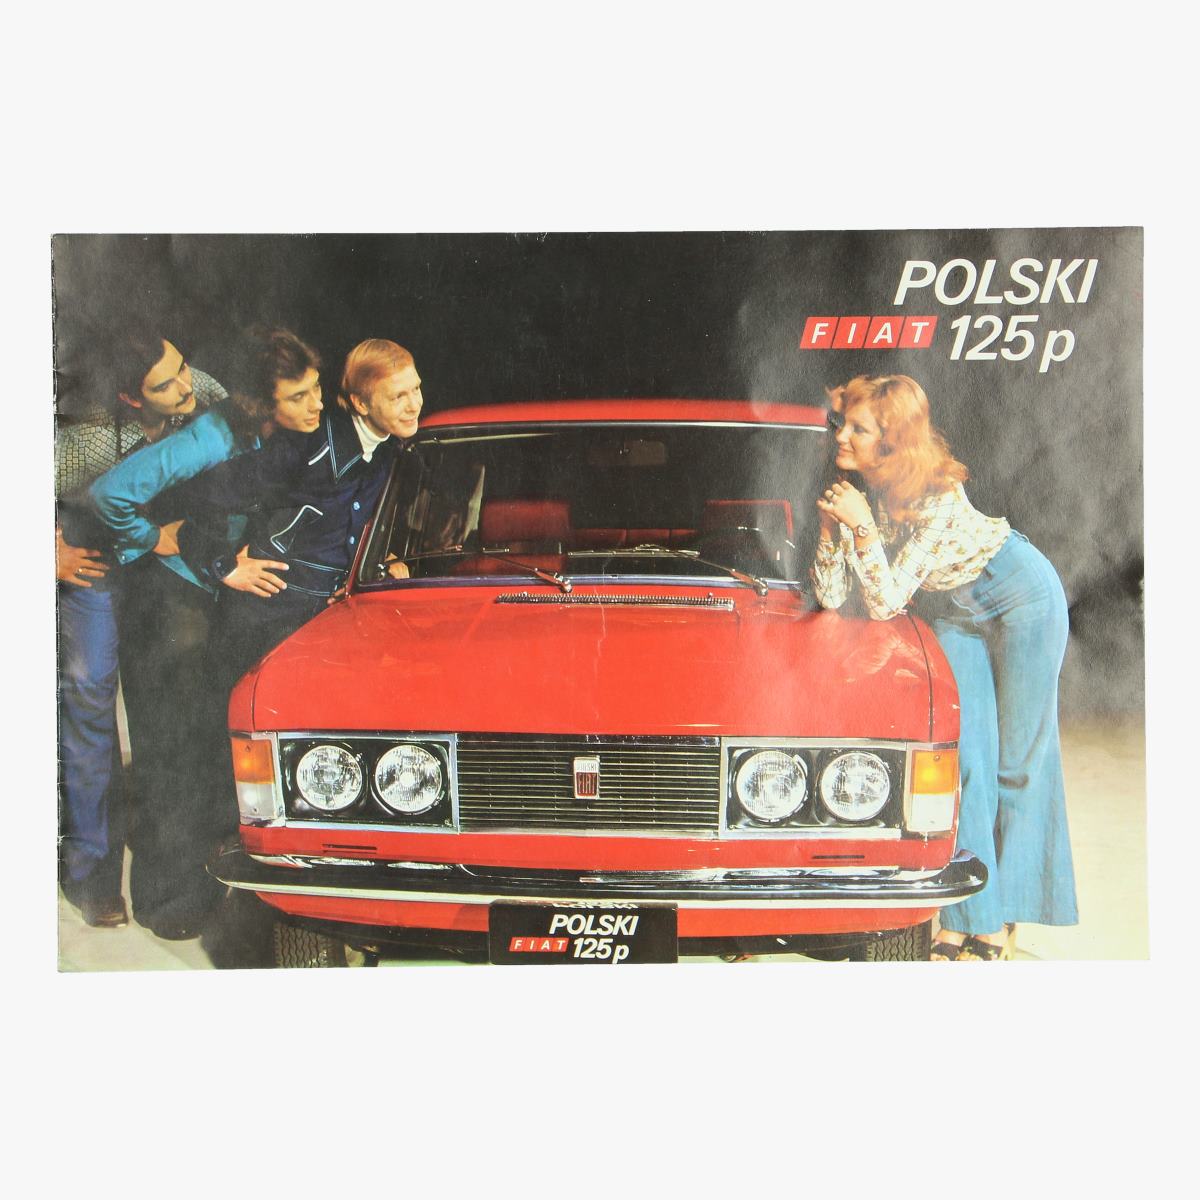 Afbeeldingen van oude reclame folder fiat polski 125p